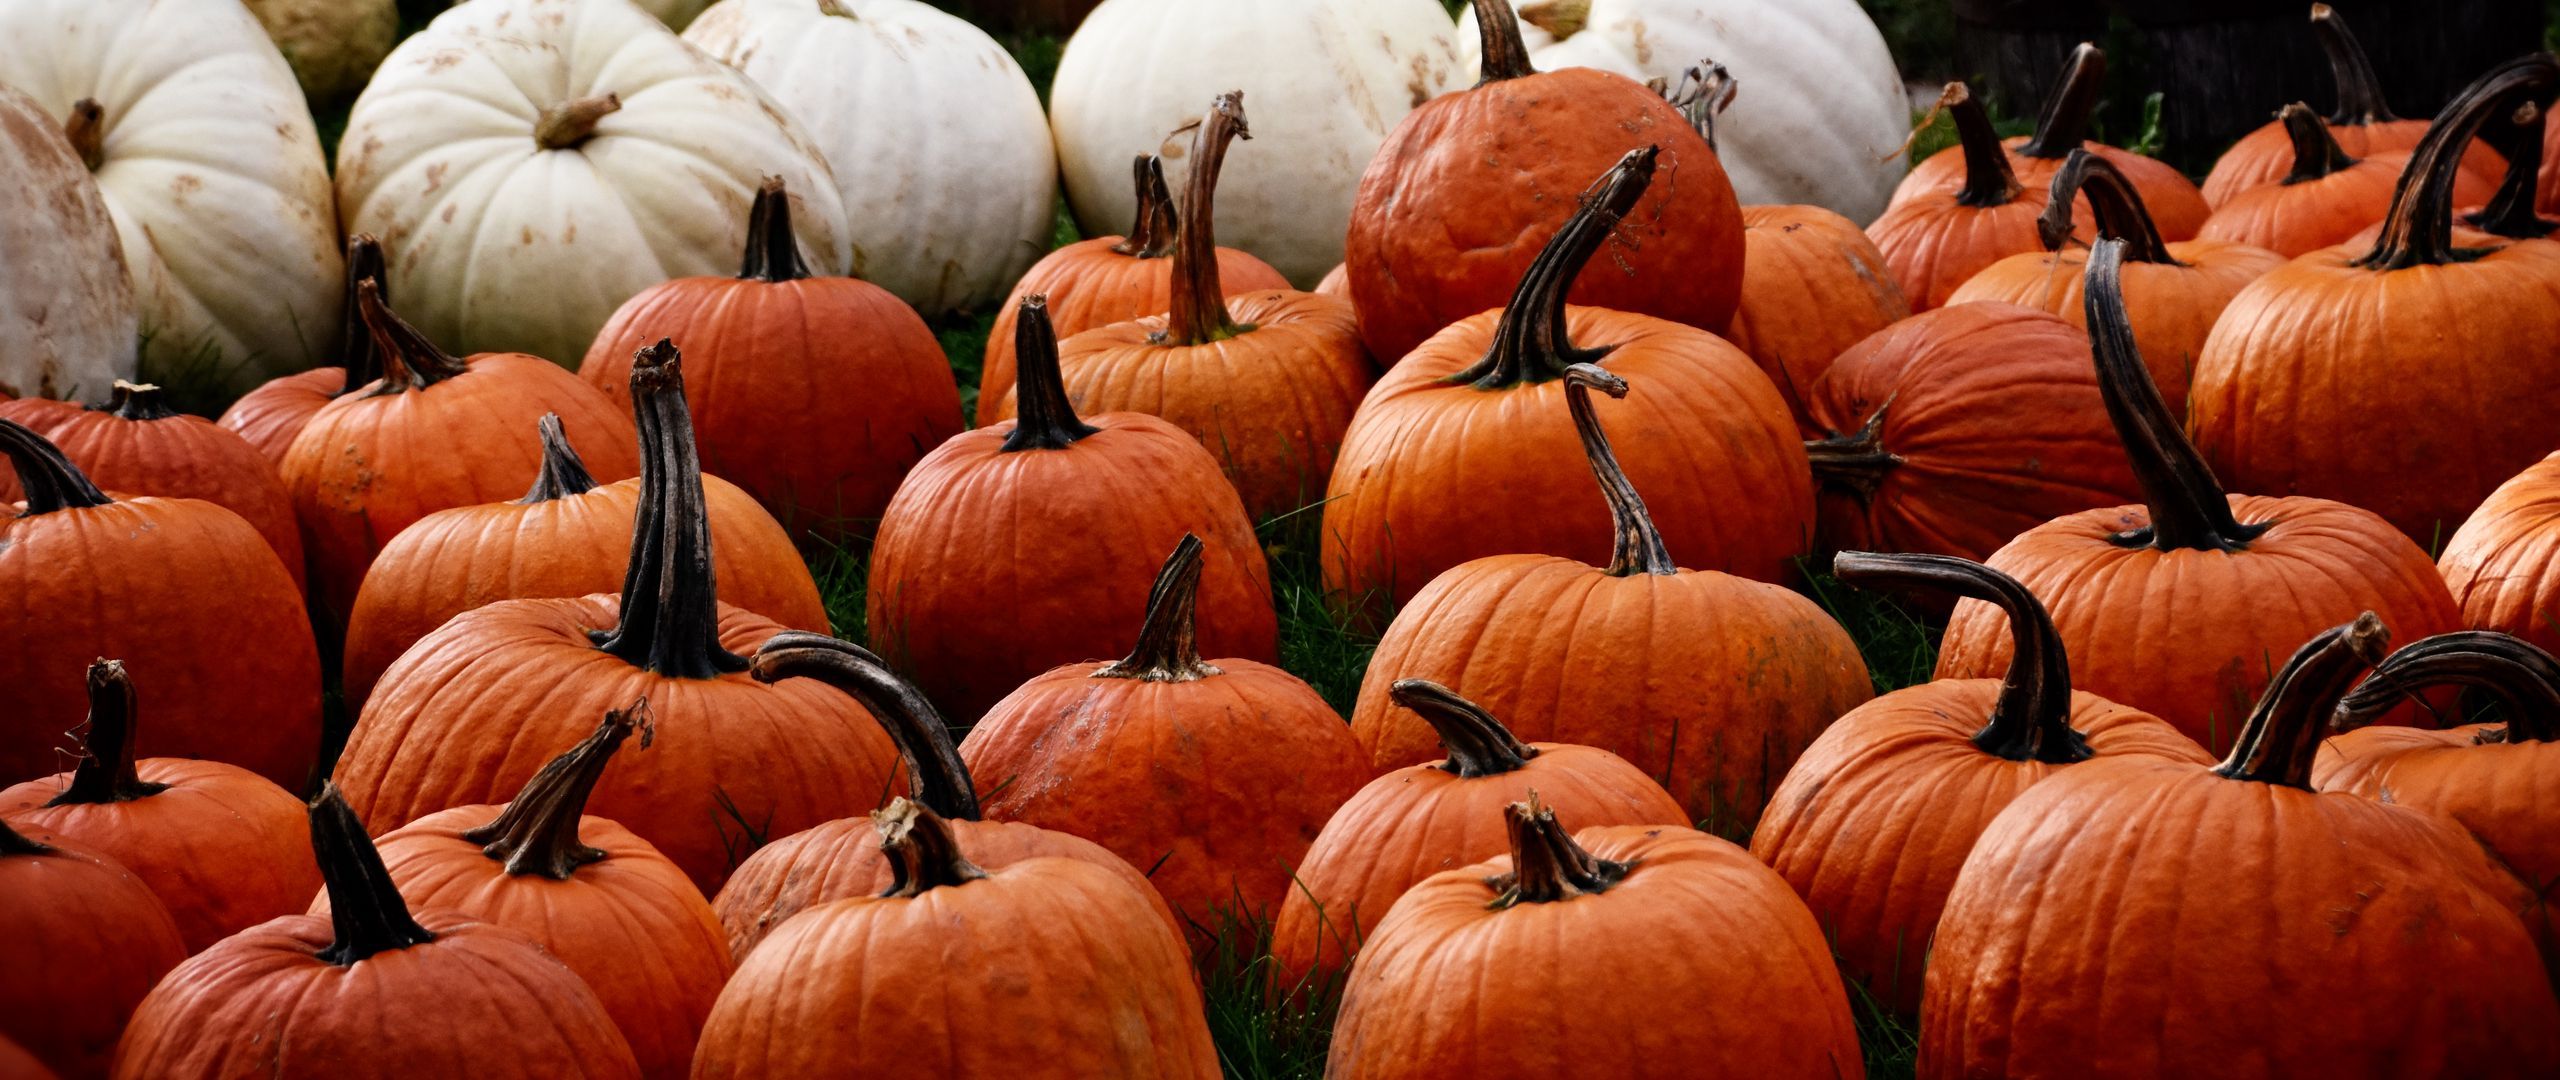 Download wallpaper 2560x1080 pumpkin, autumn, harvest dual wide 1080p HD background